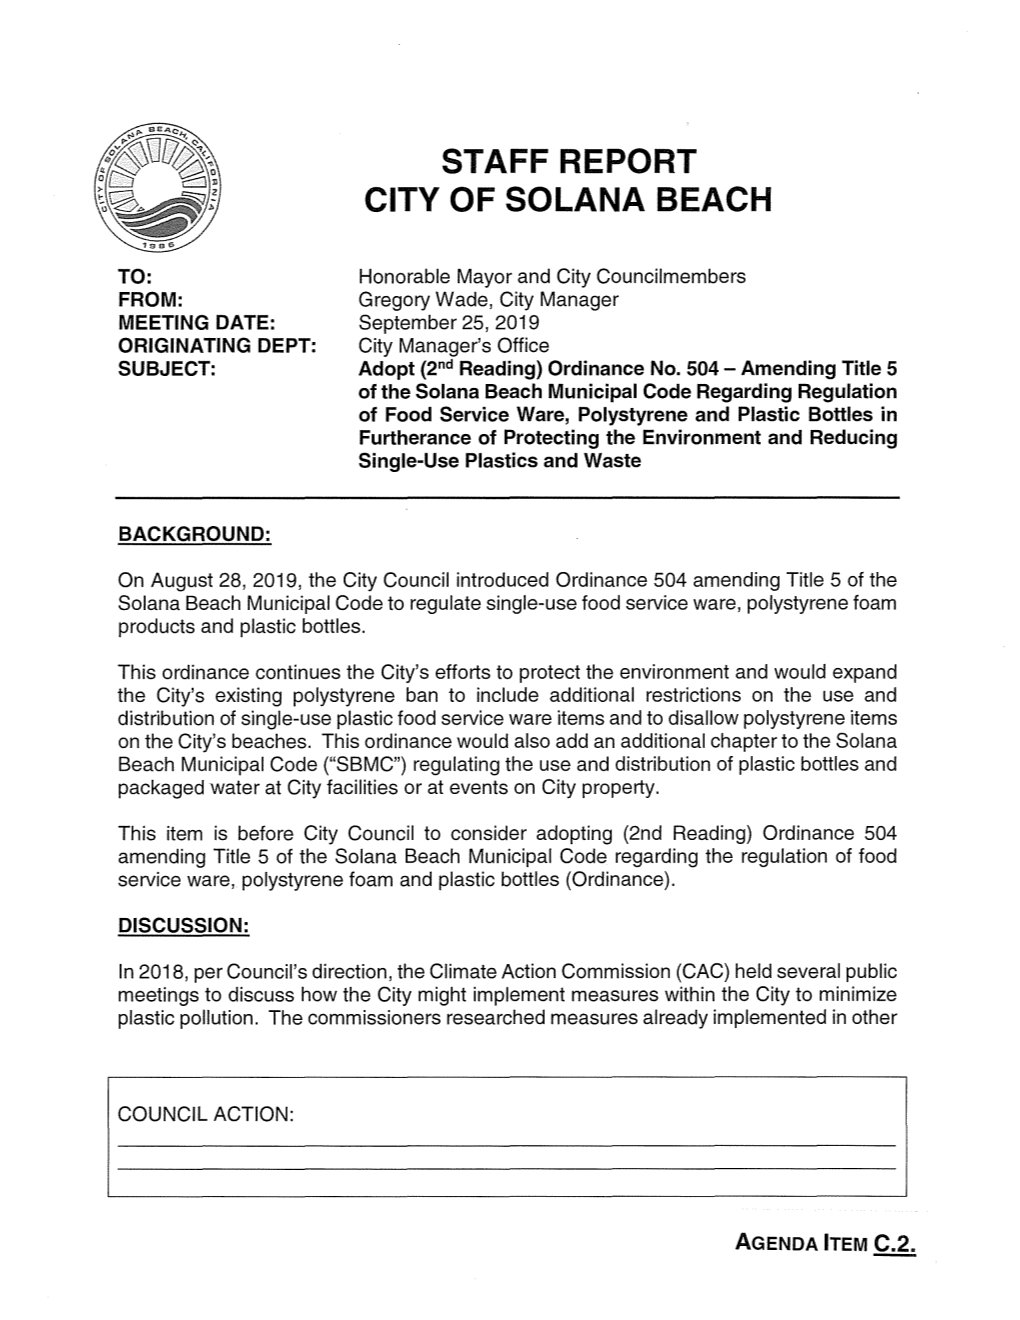 Staff Report City of Solana Beach